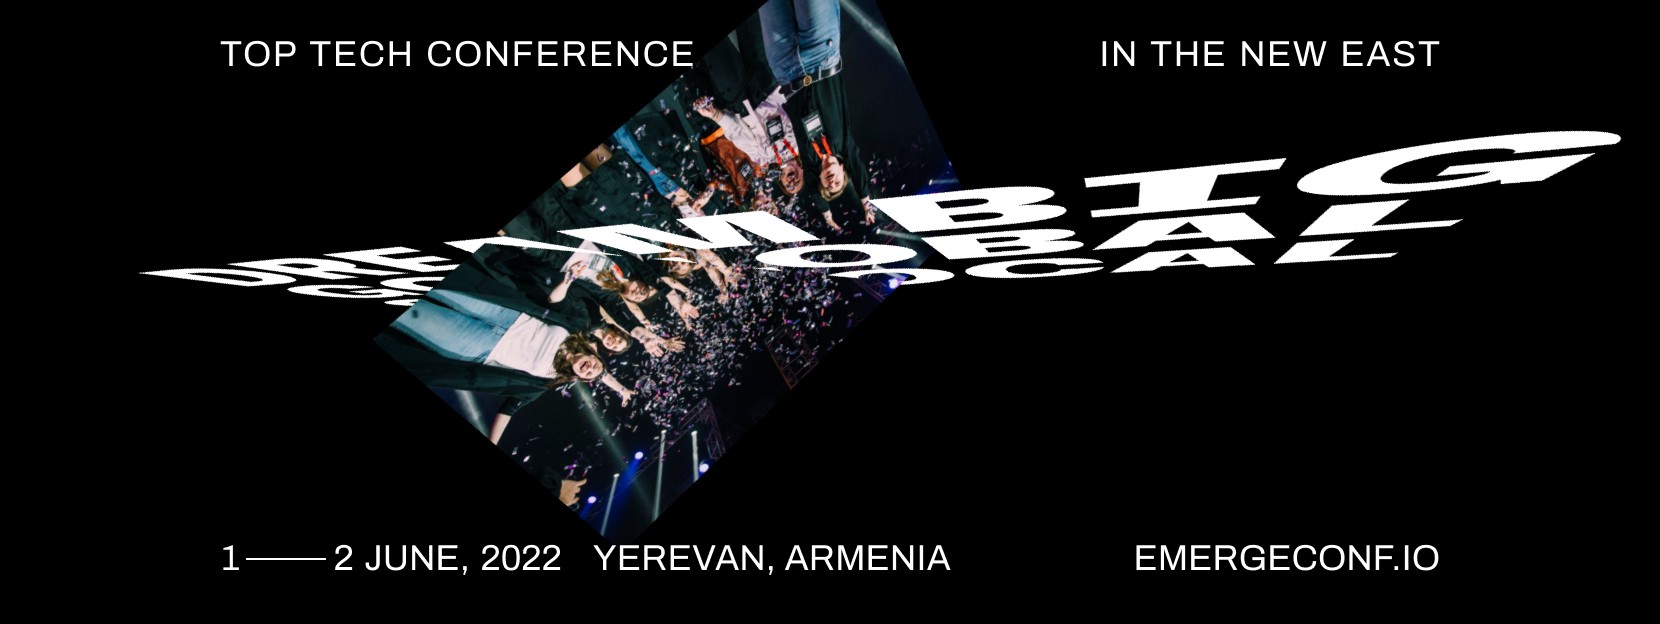 EMERGE conference 2022 Yerevan